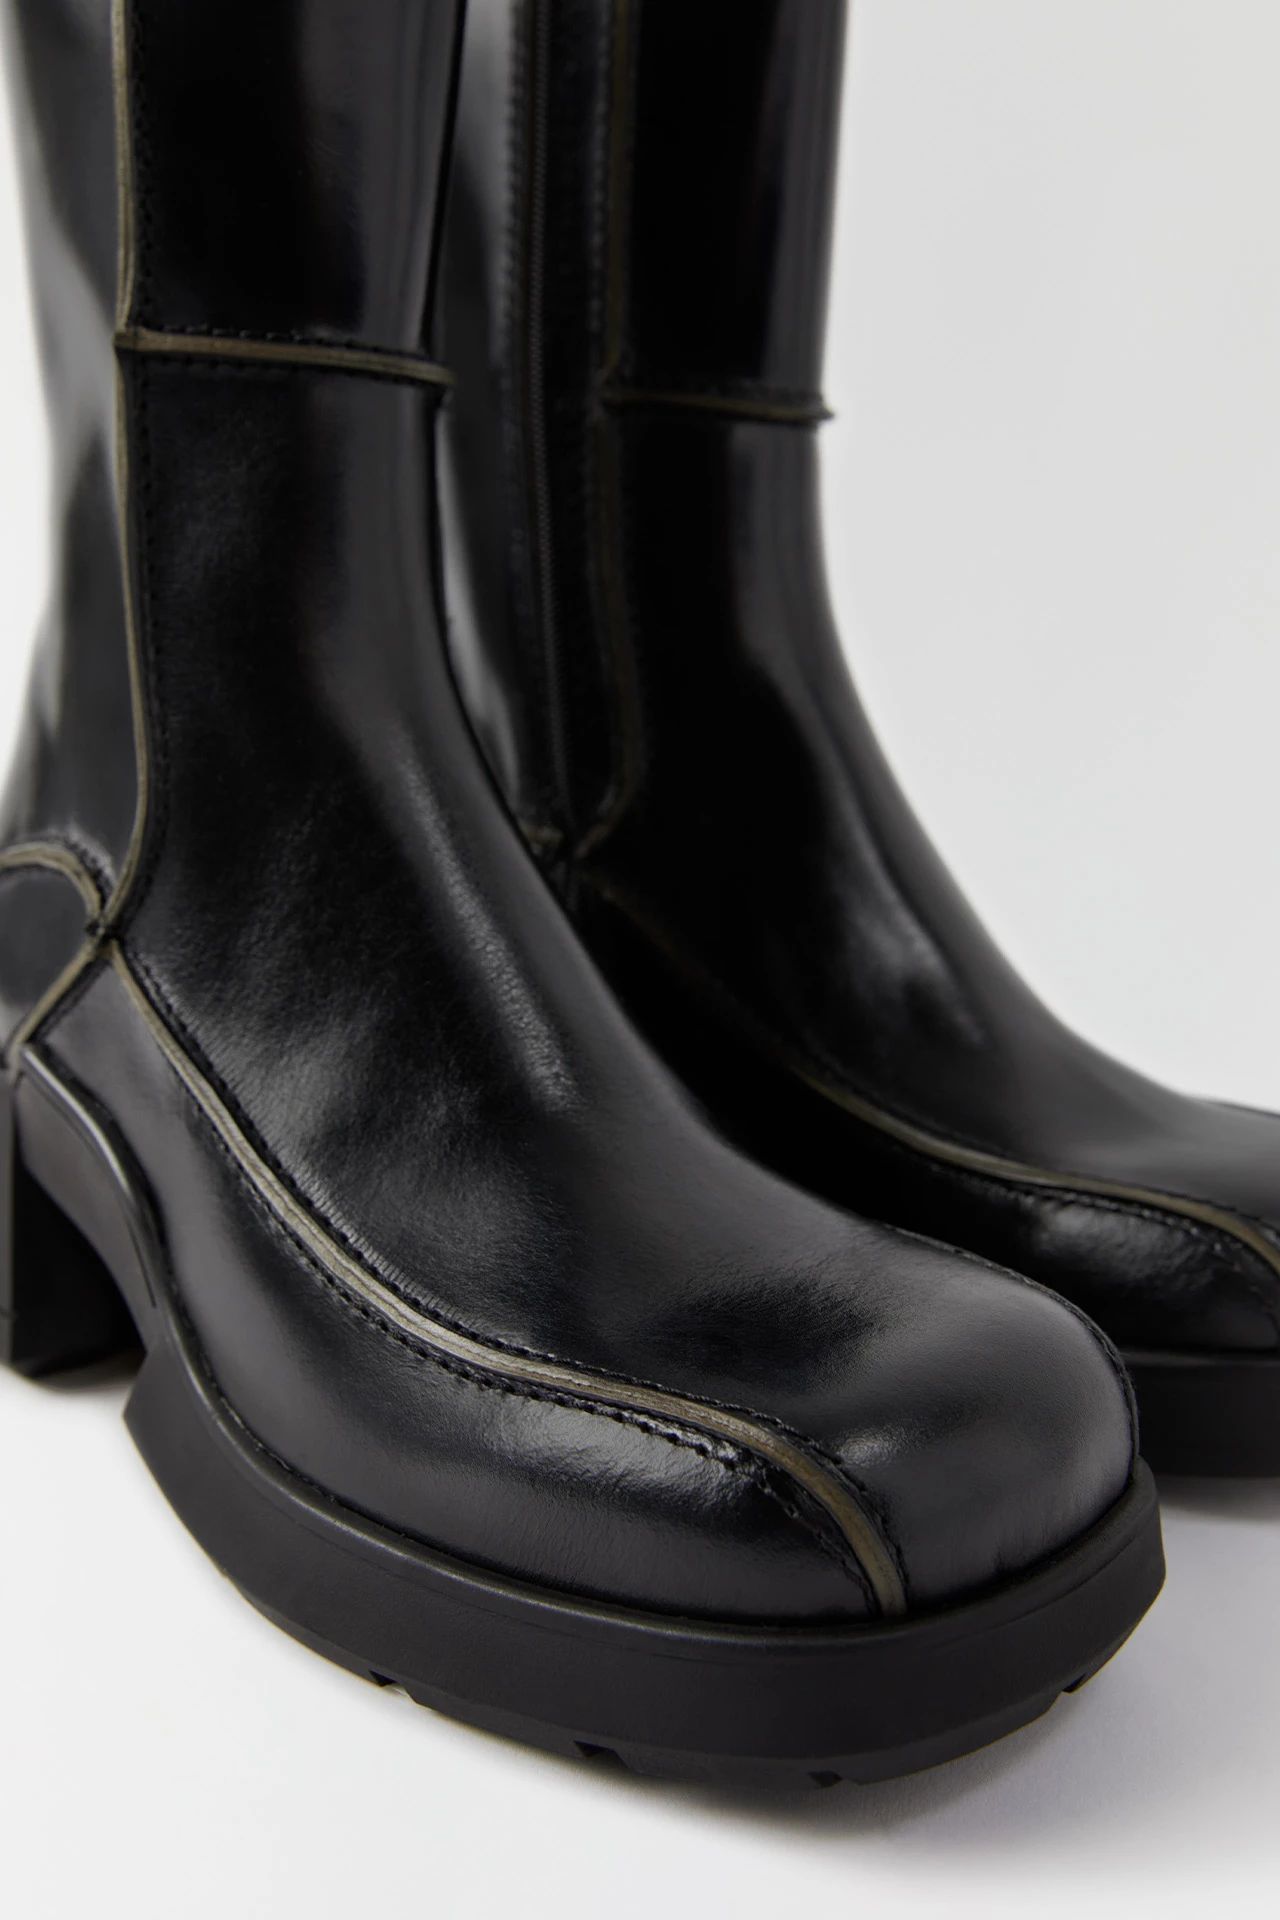 e8-meiko-black-boots-03